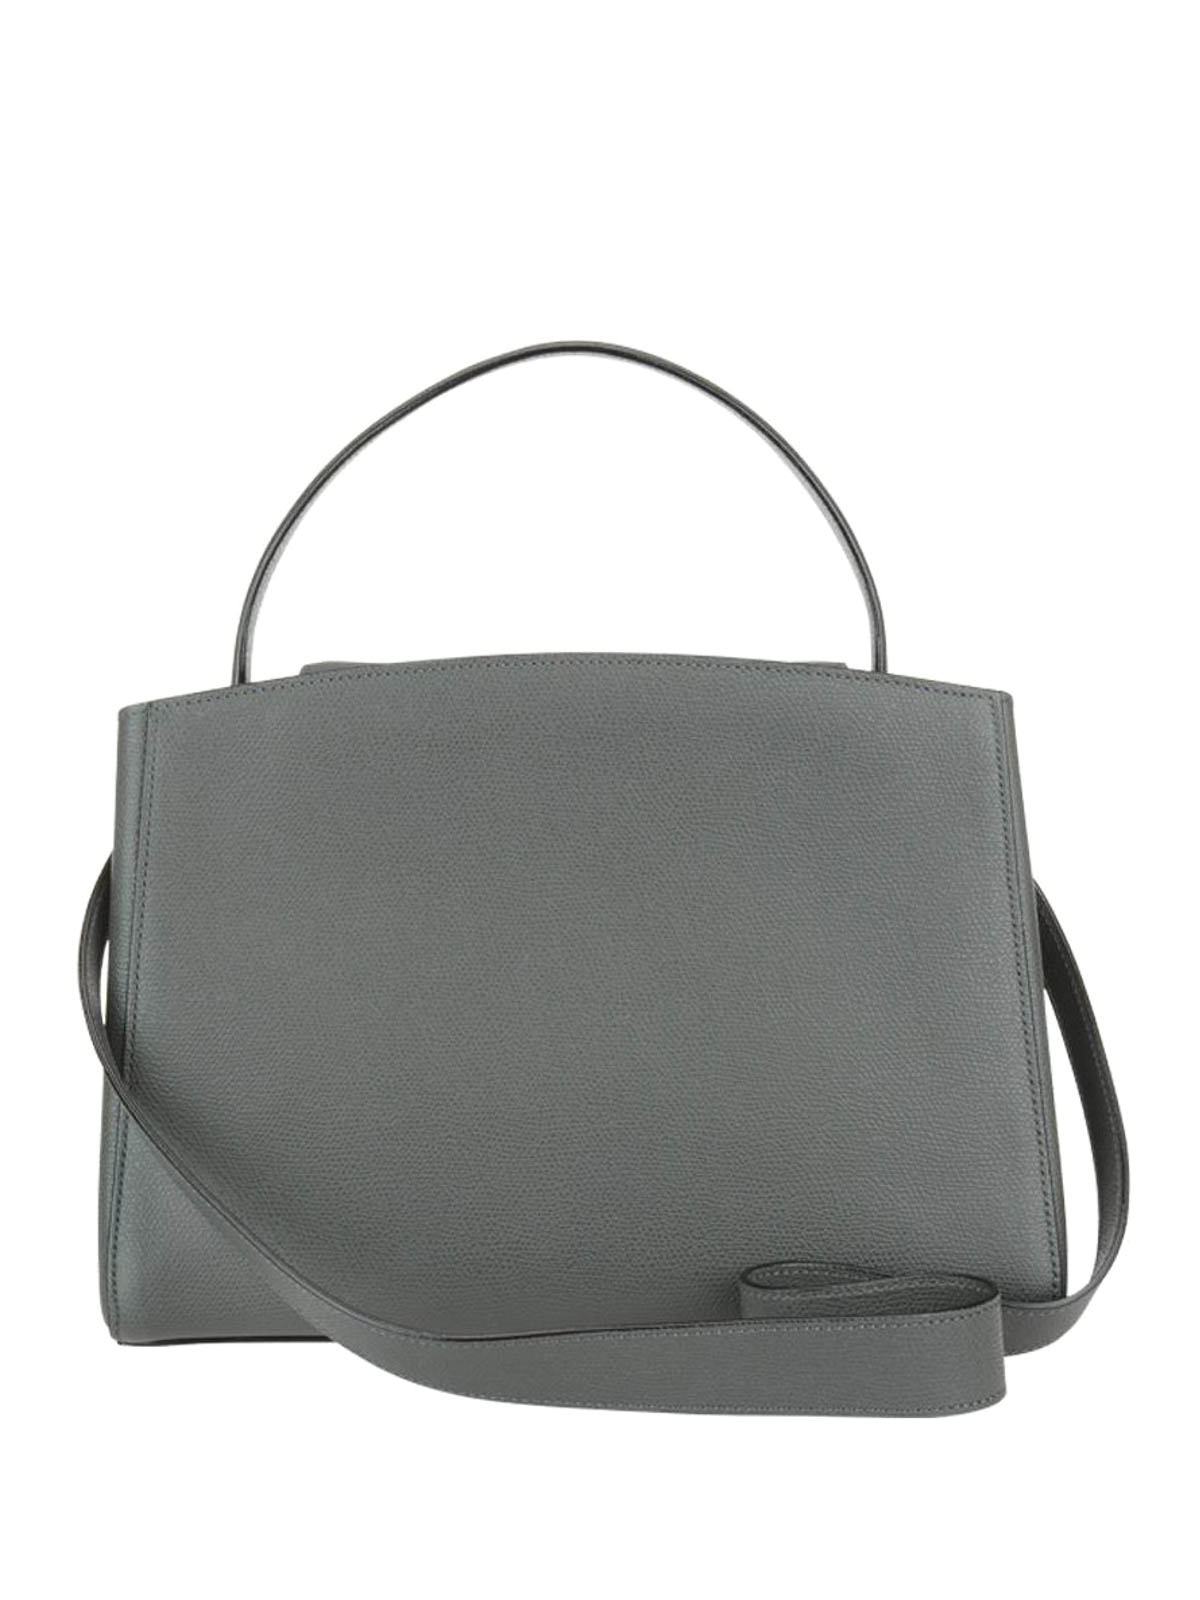 Valextra Brera Micro Top Handle Bag Bag in Black